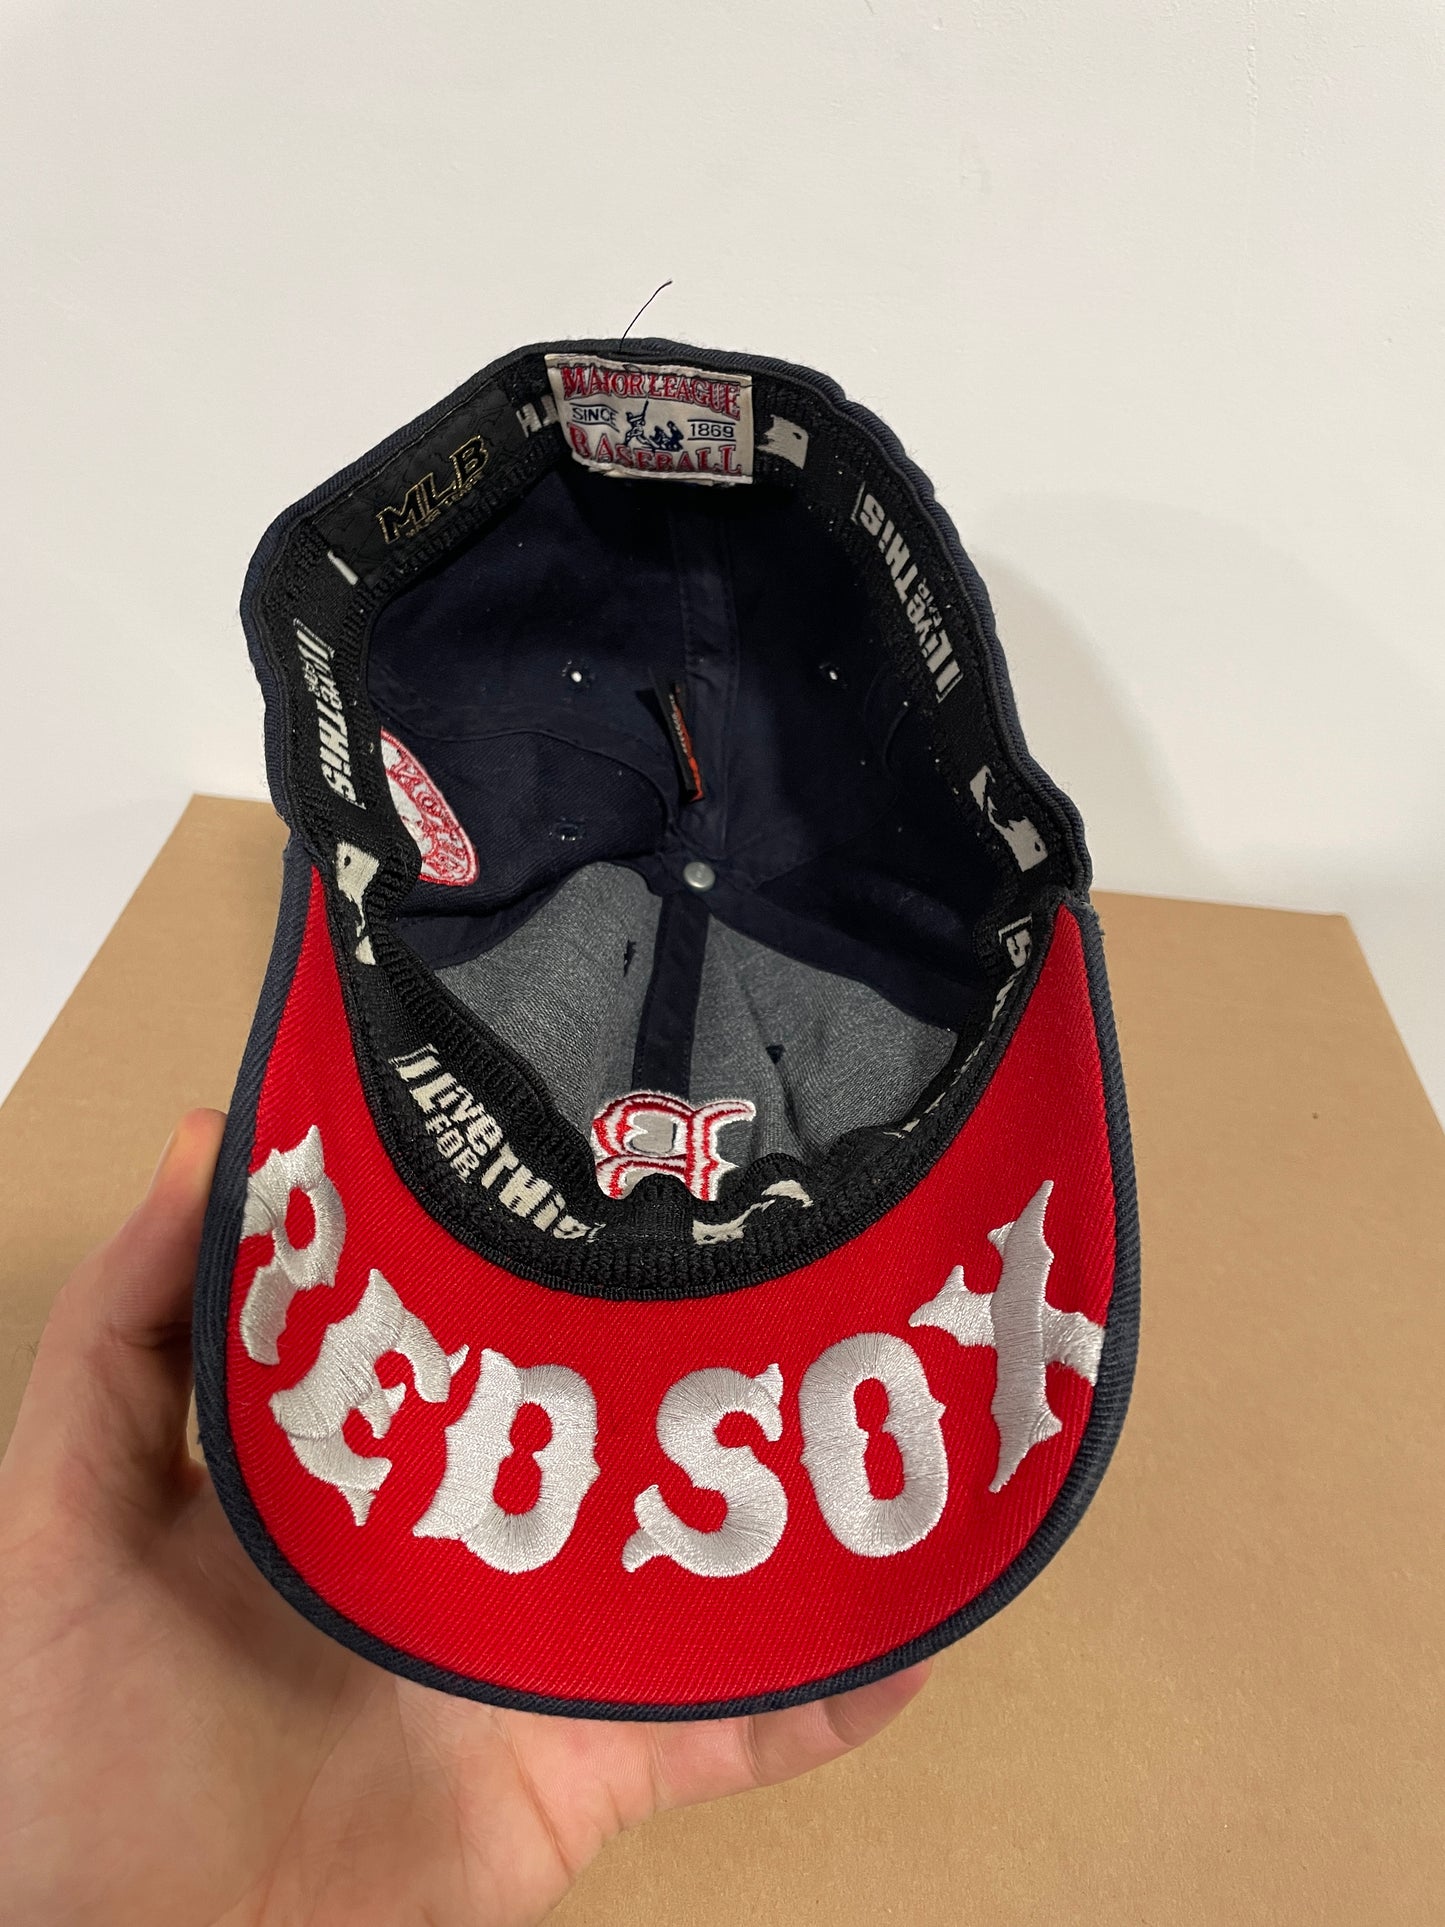 Cappello MLB Boston Red Sox (B996)